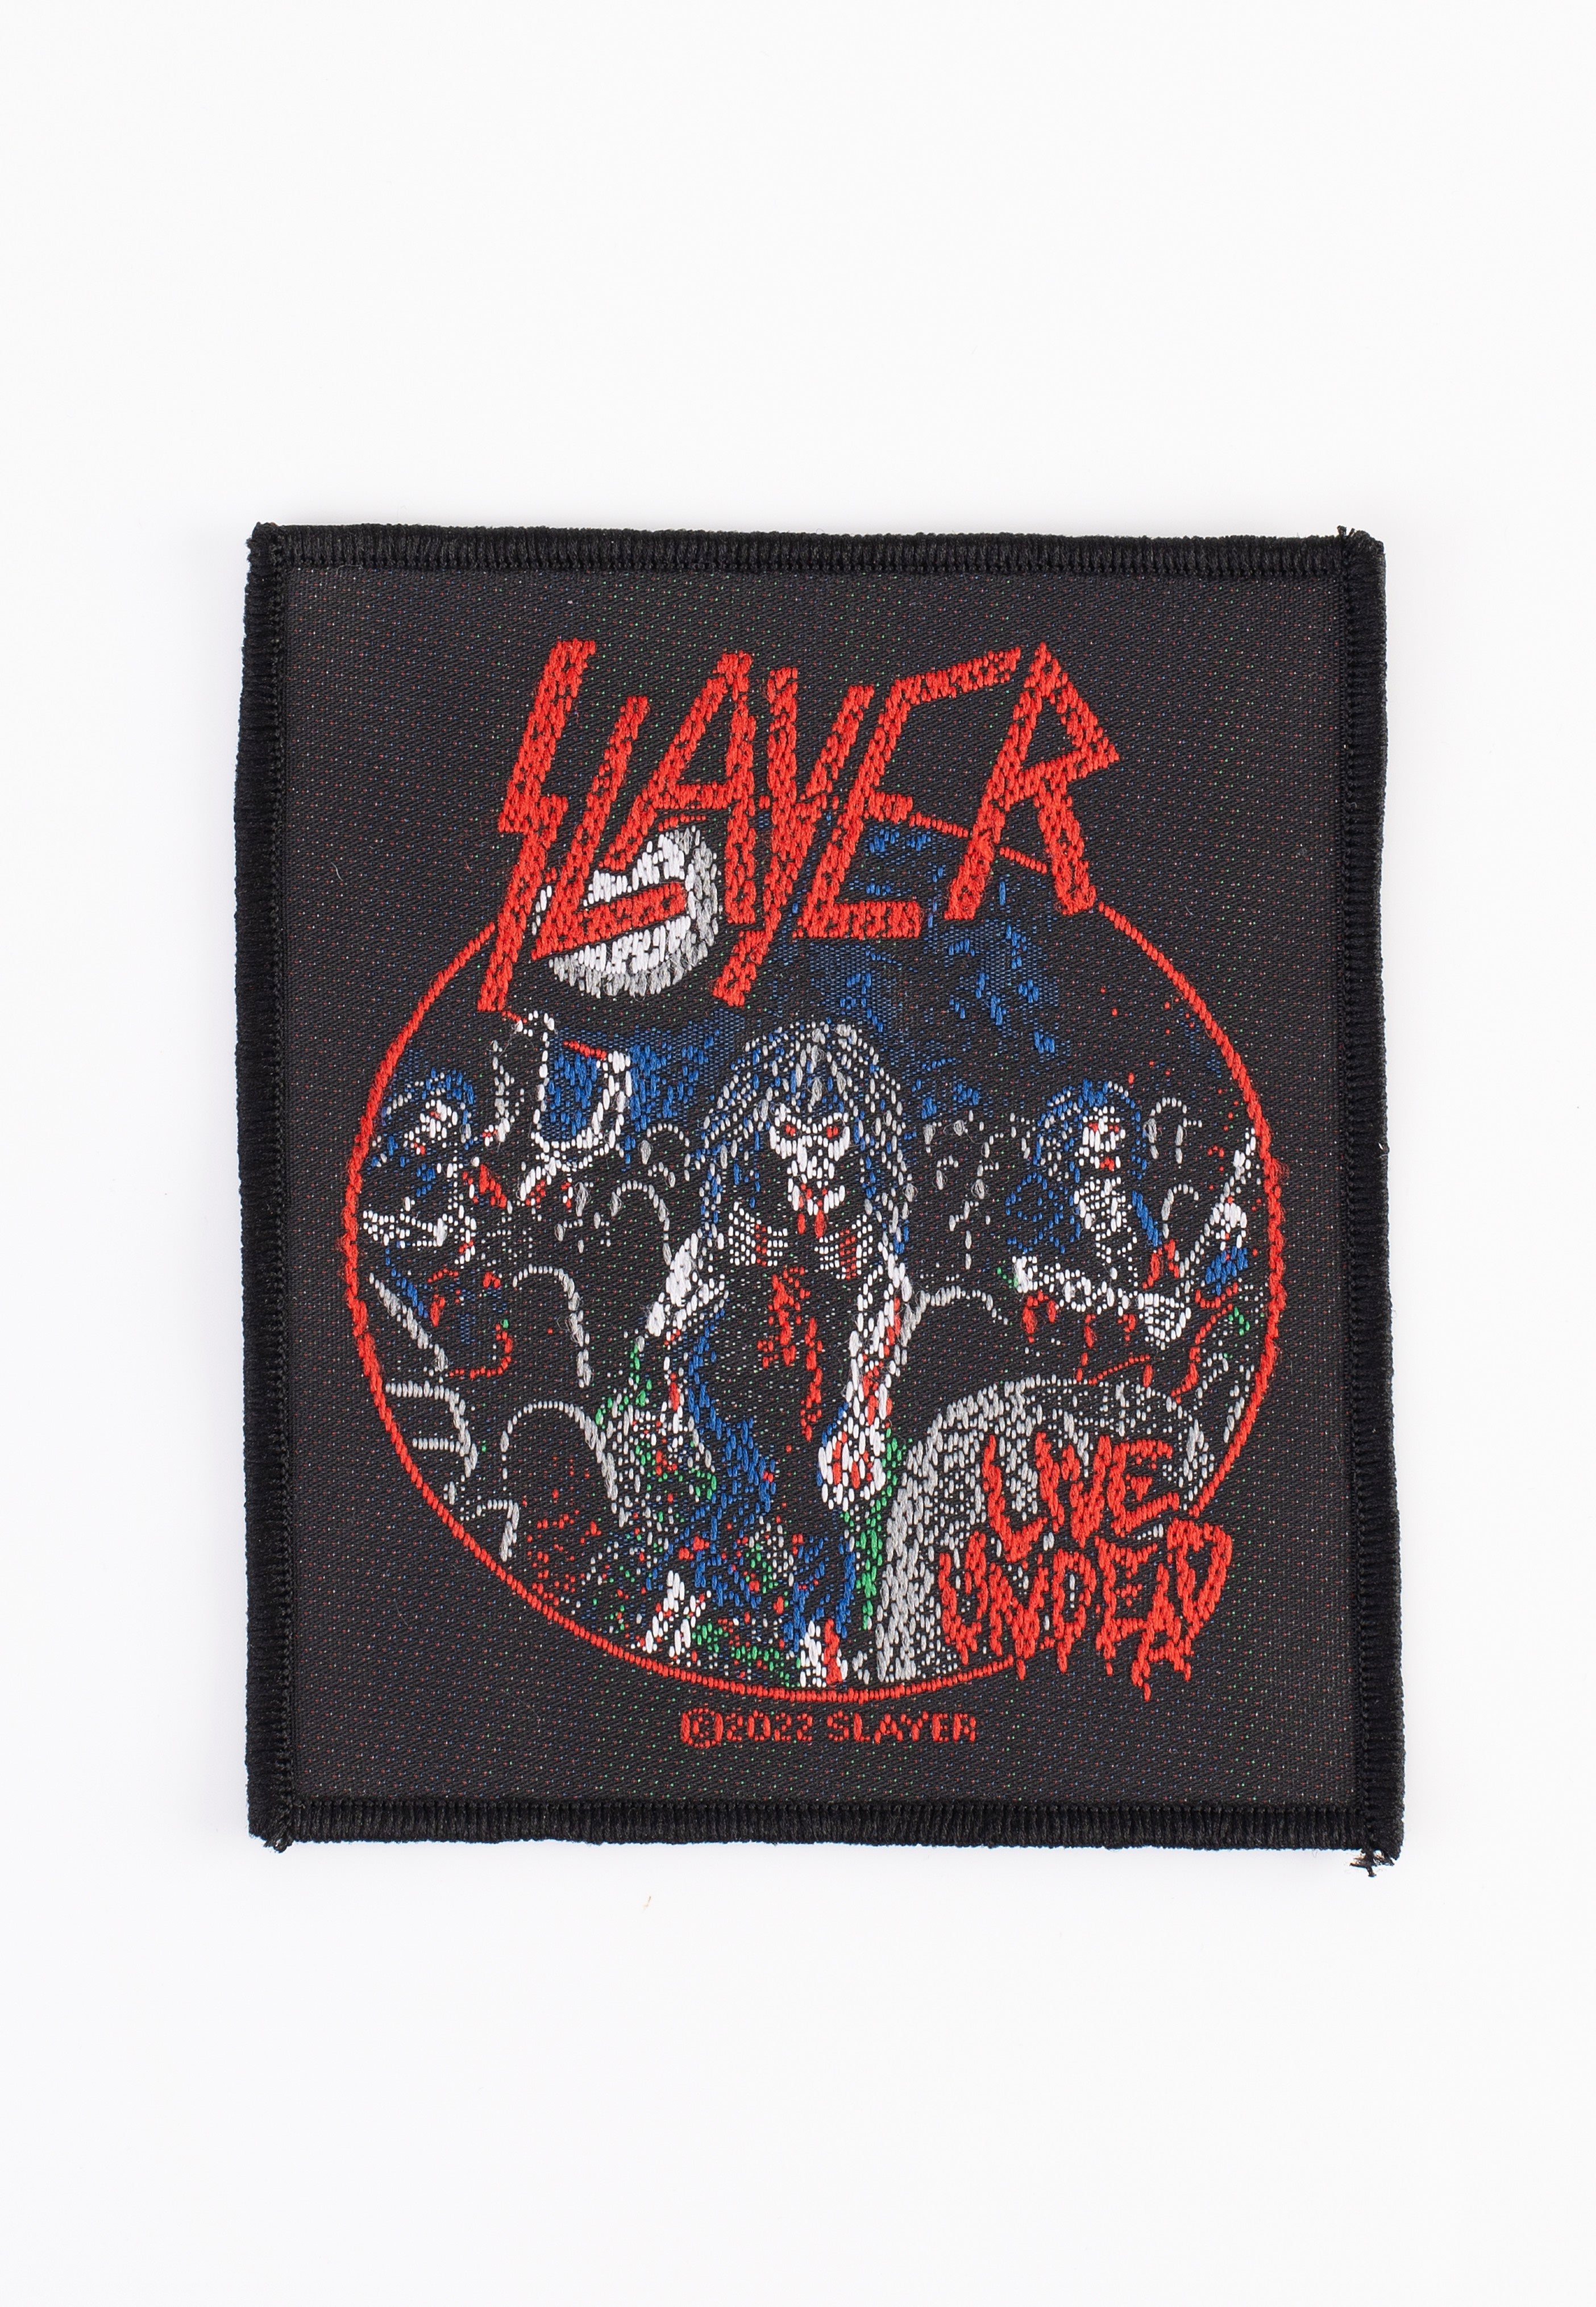 Slayer - Live Undead - Patch